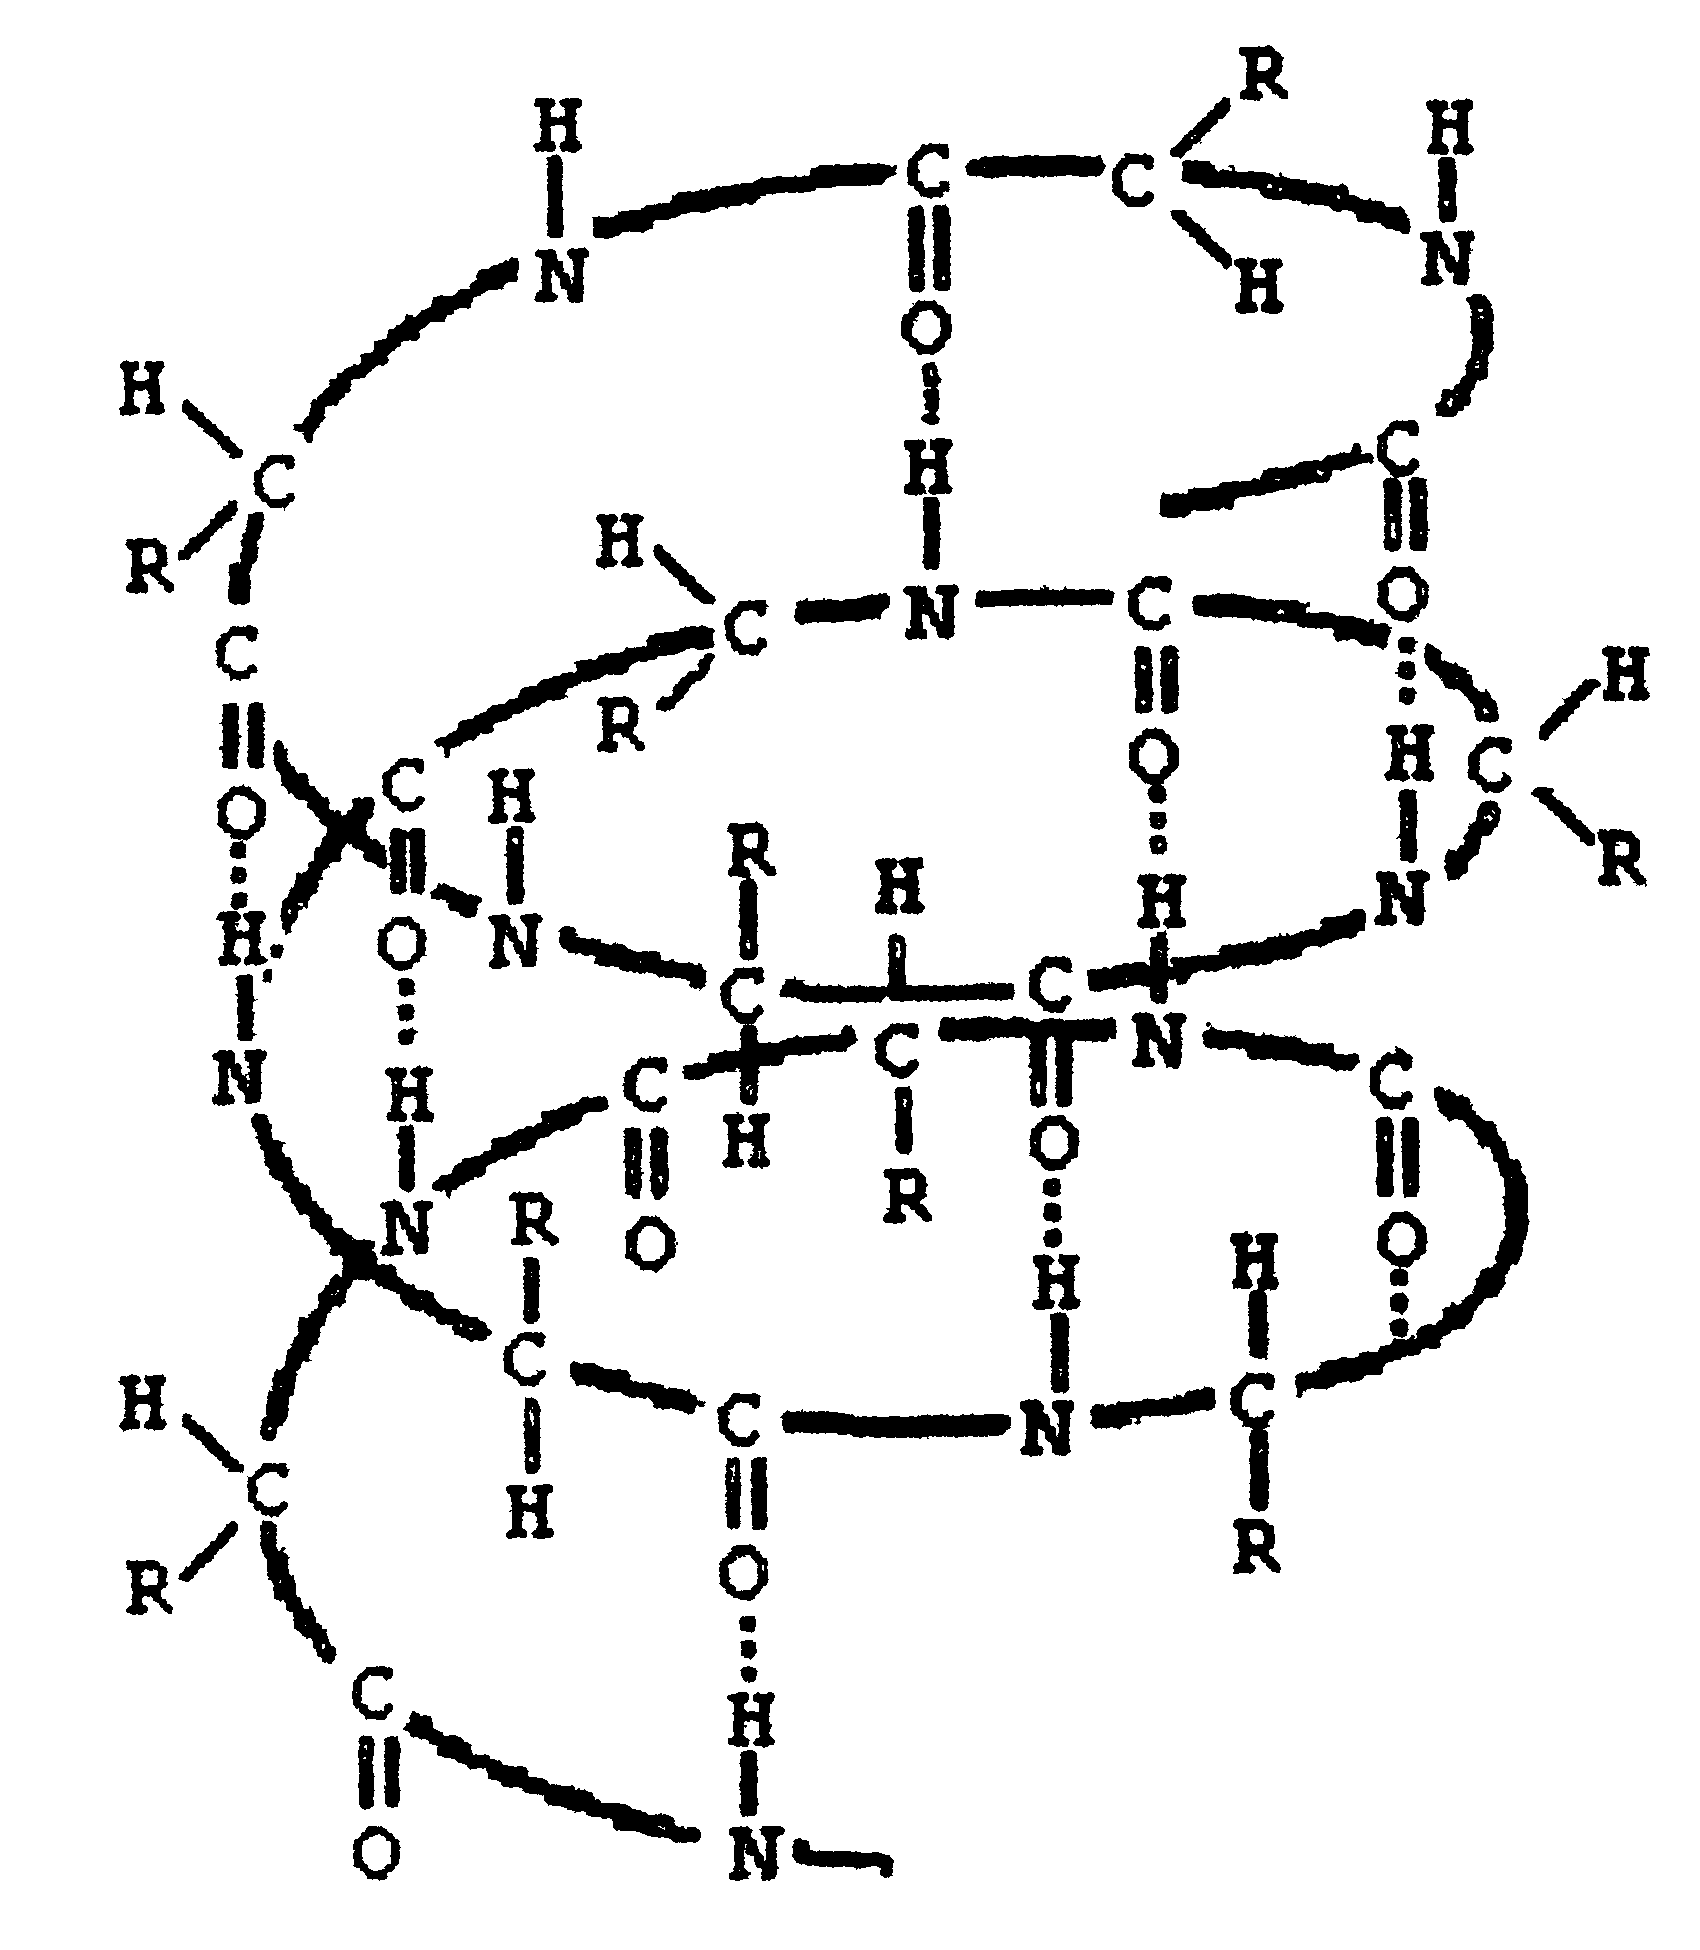 Вторичная структура белка